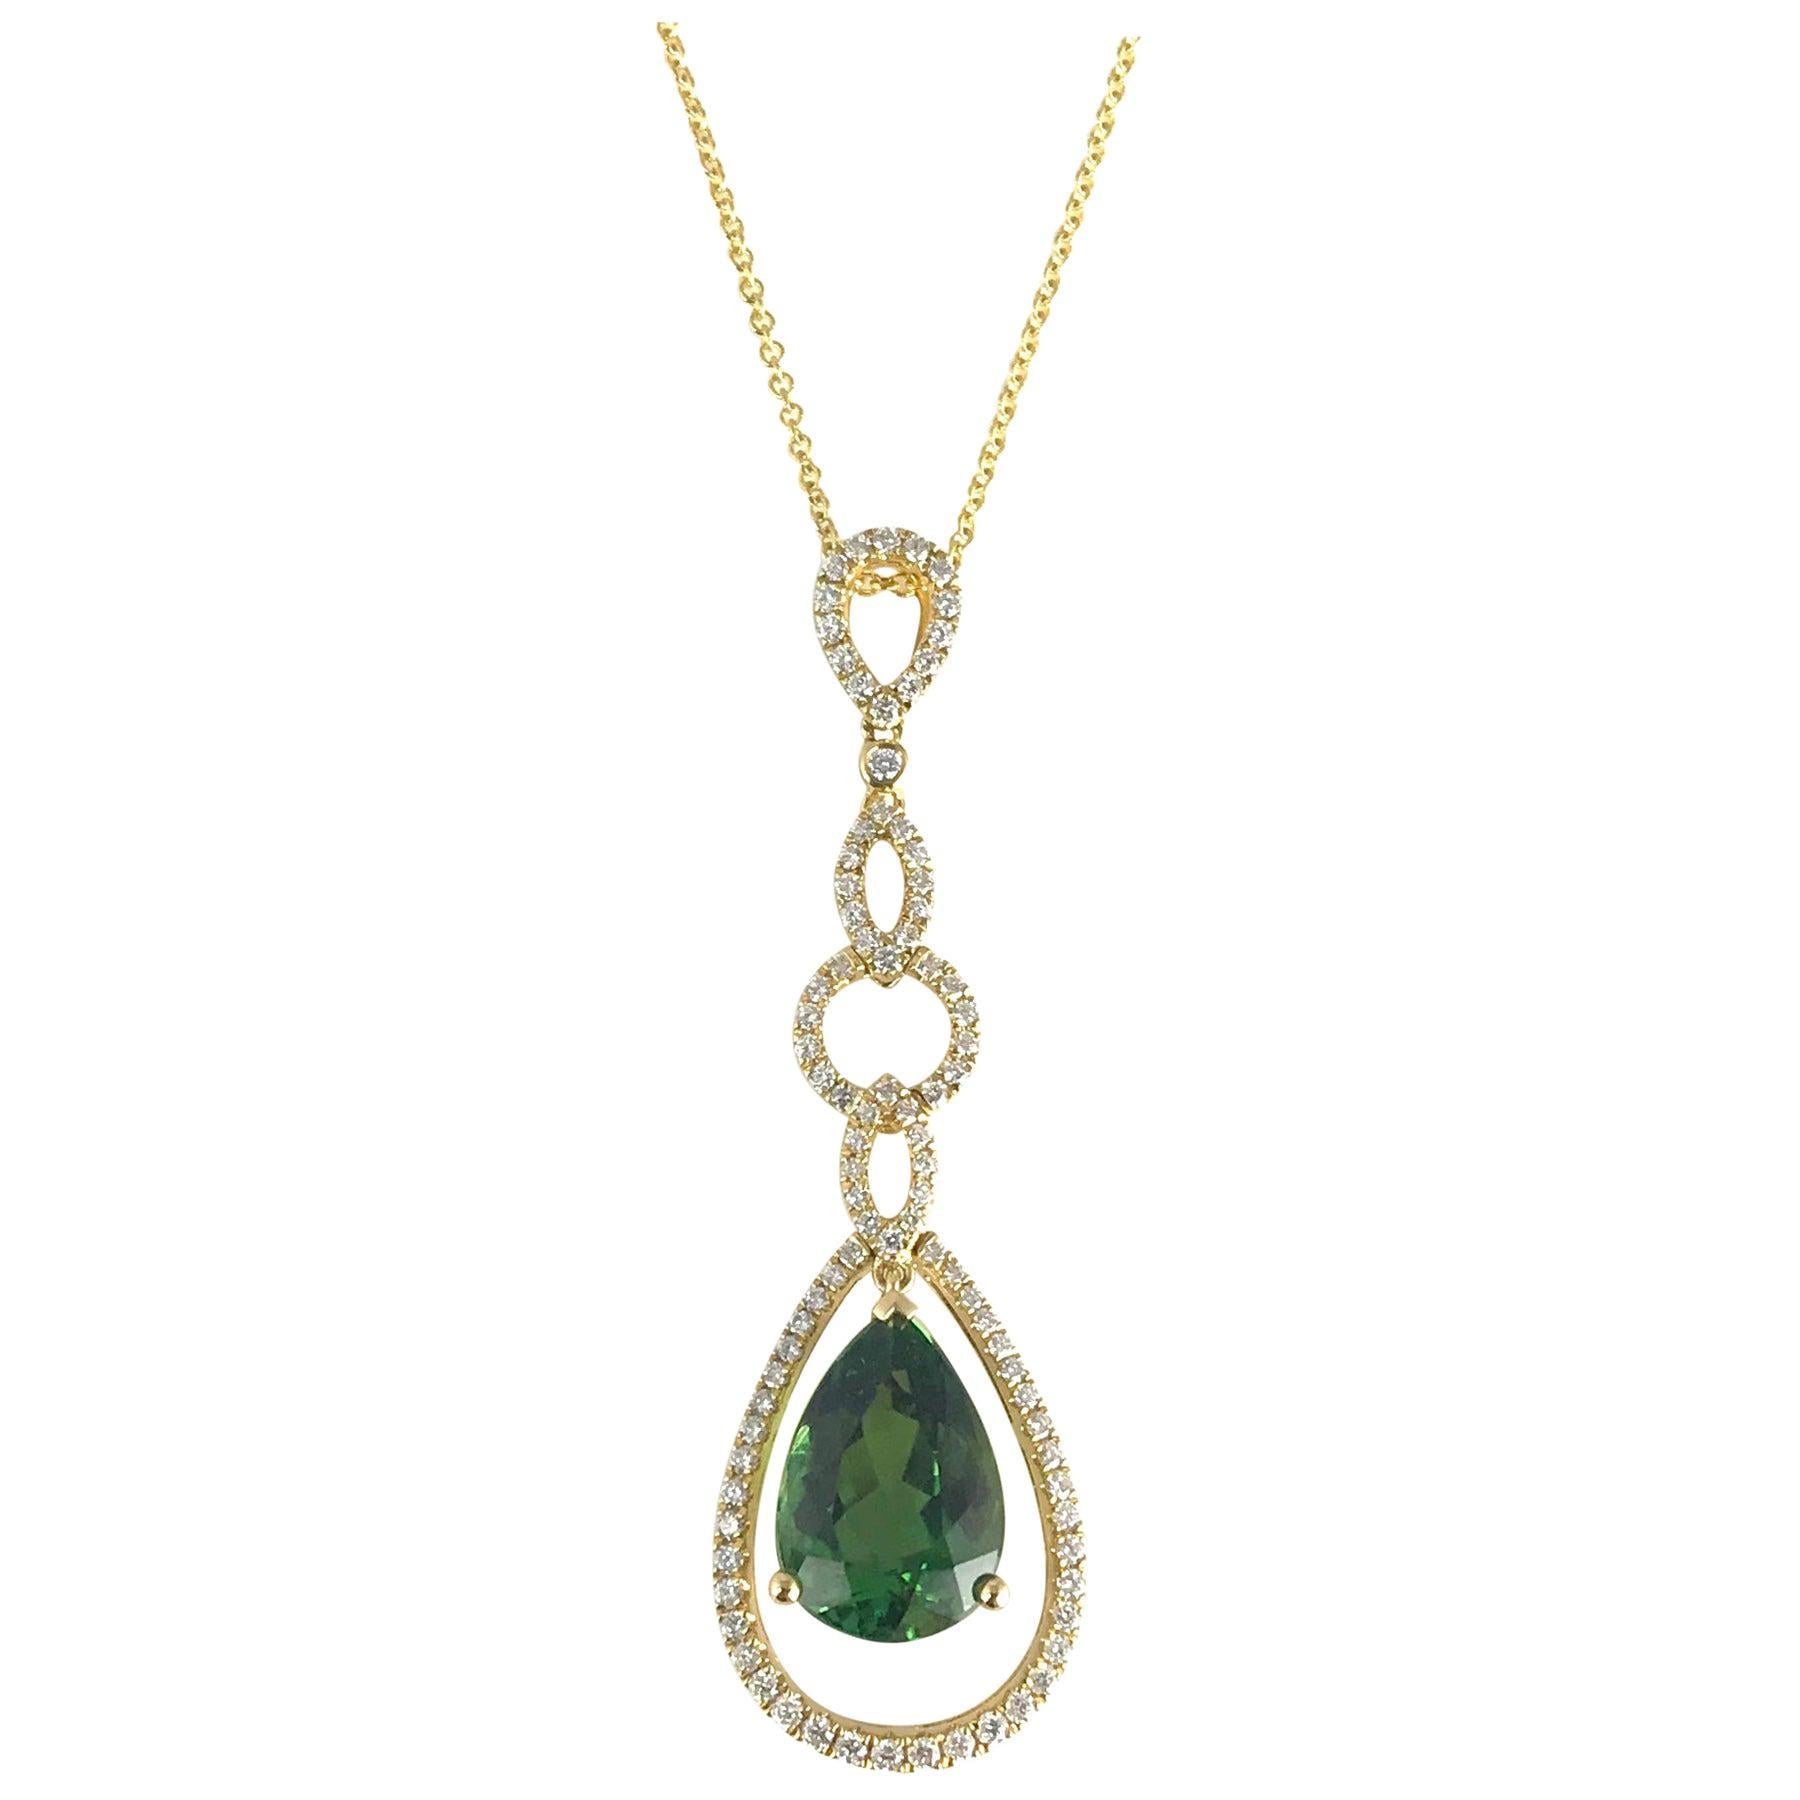 3.83 Carat Pear Shape Green Tourmaline and Diamond Pendant in 18 Karat Gold